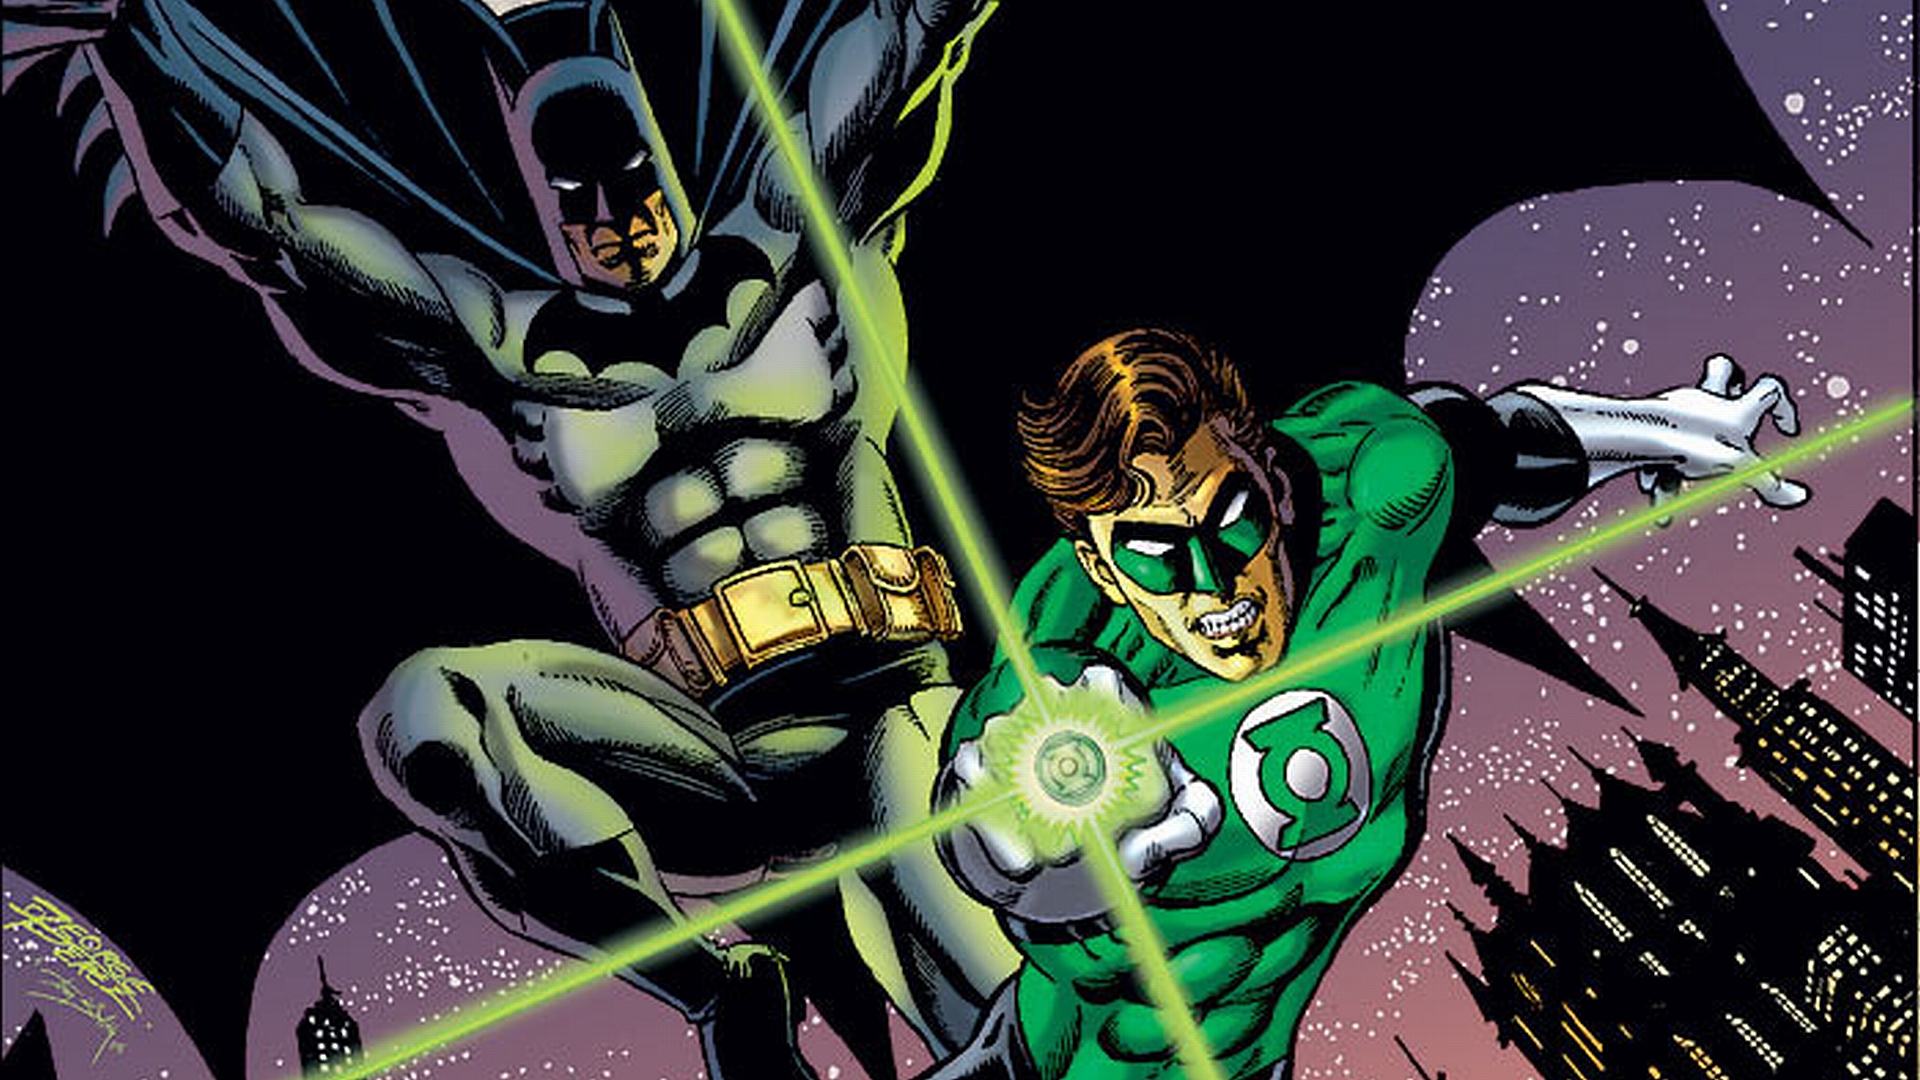 Bold Batman and fearless Green Lantern team up in this striking comic-inspired desktop wallpaper.